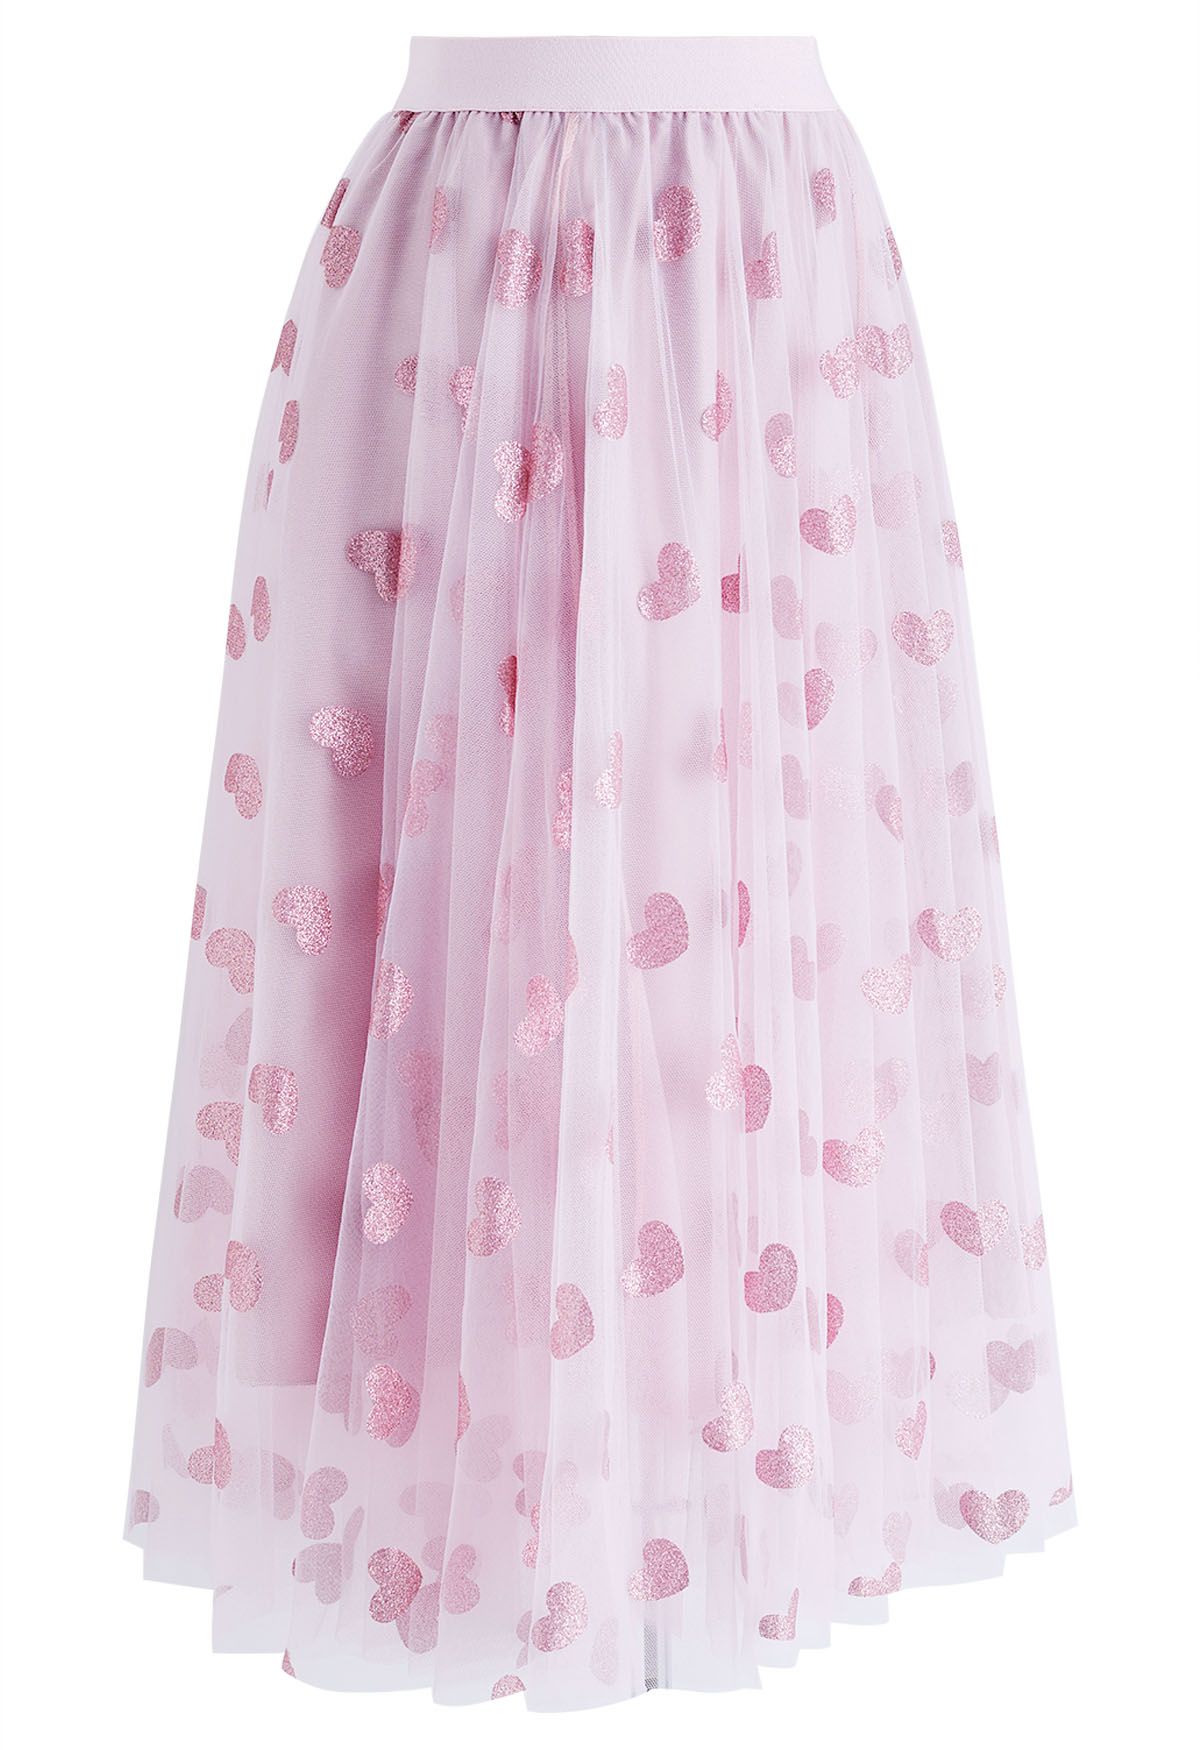 Shimmering Hearts Mesh Tulle Midi Skirt in Pink